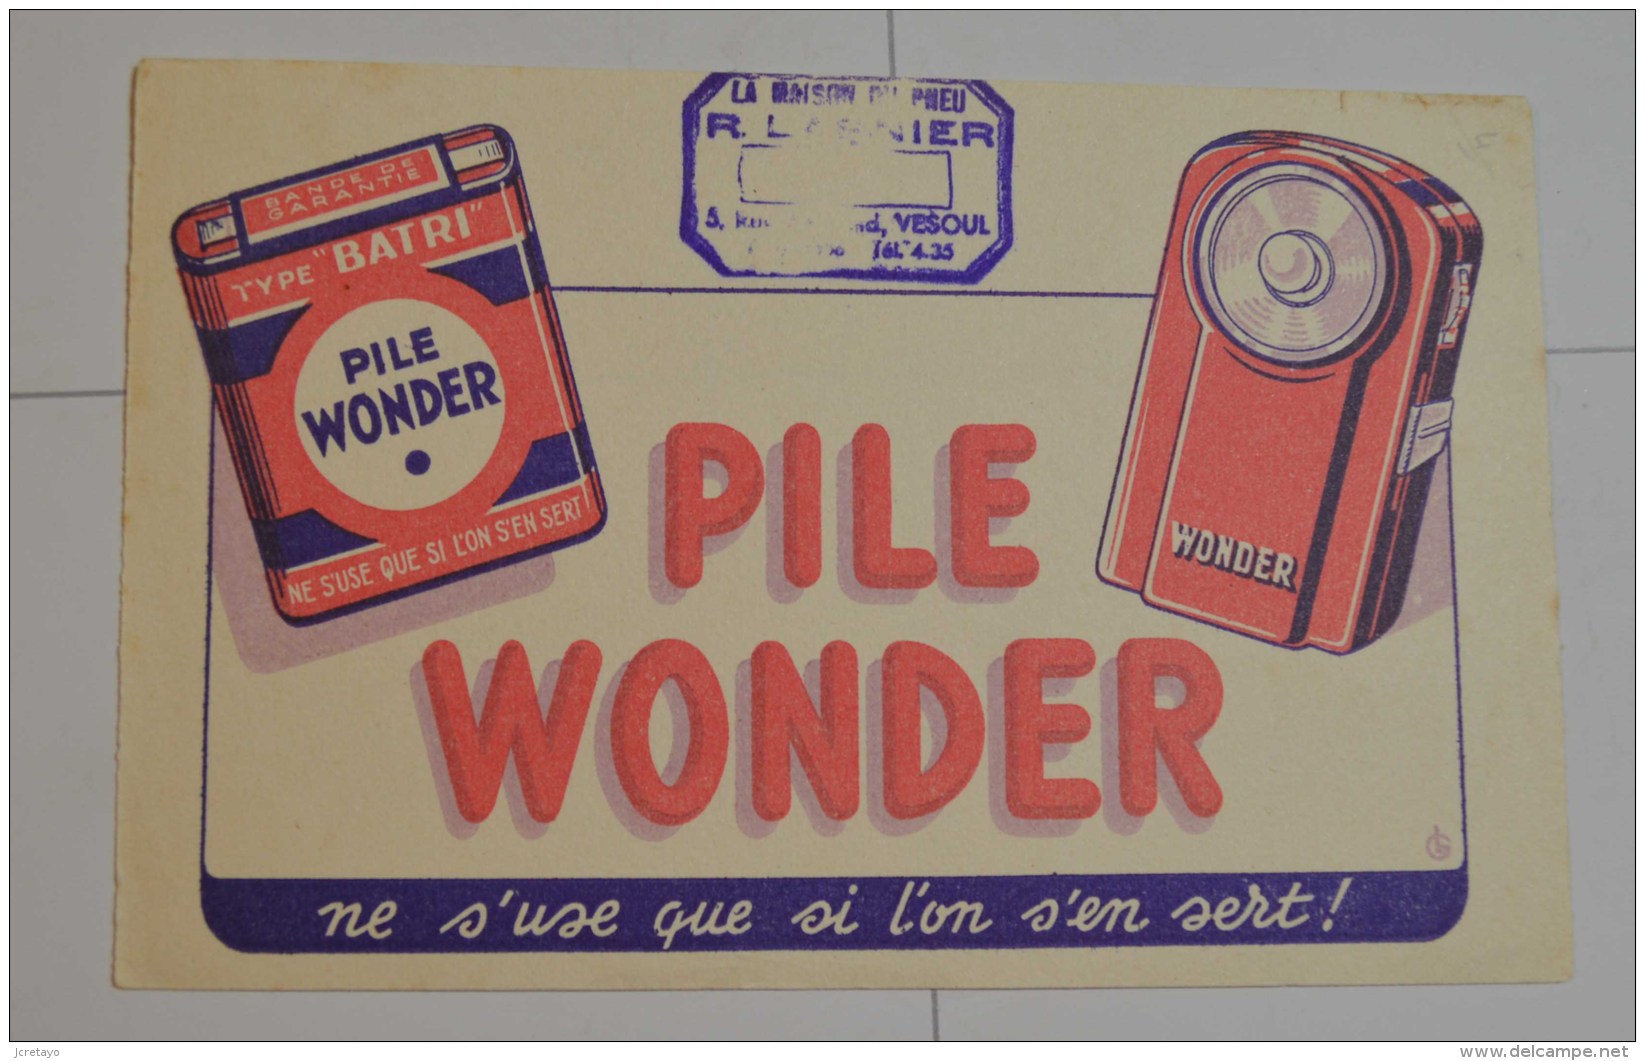 Pile Wonder - Piles